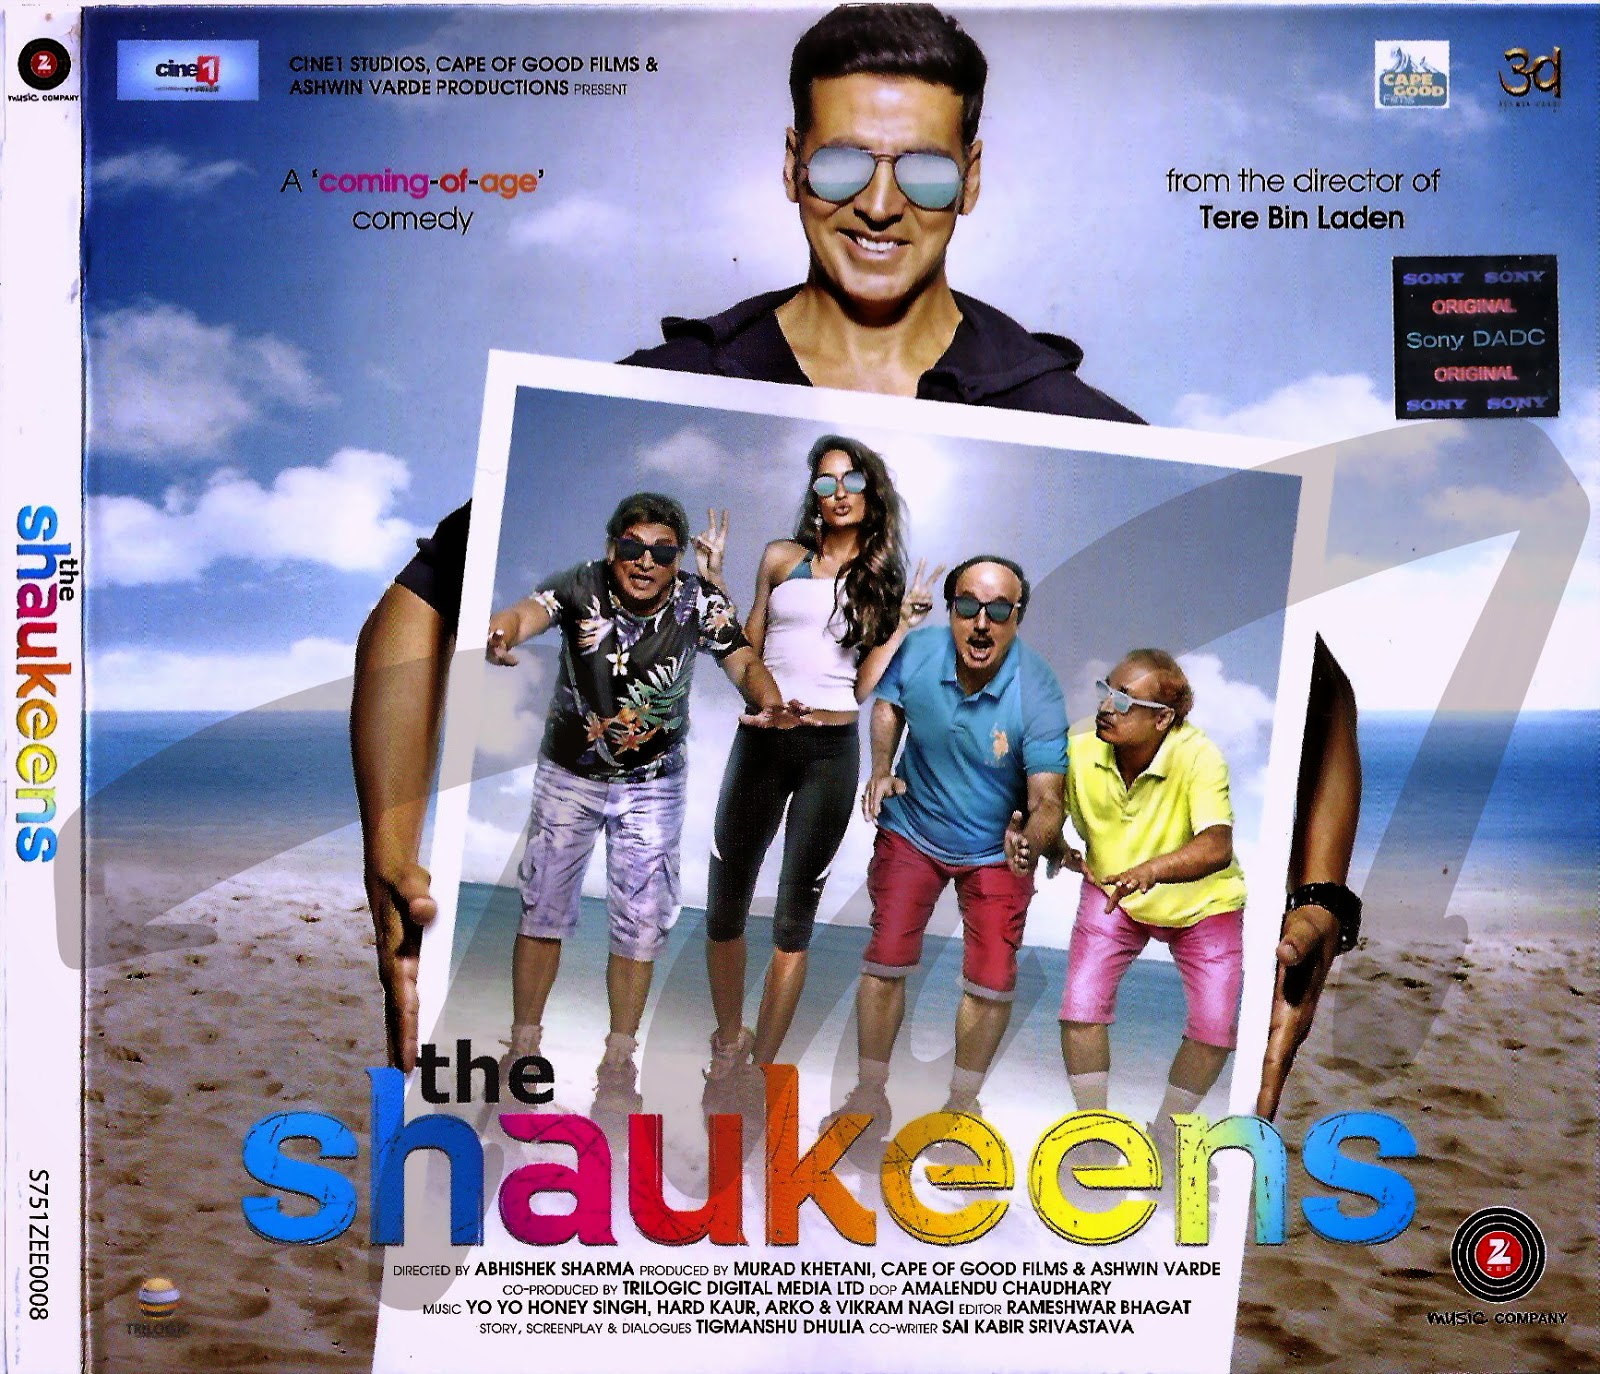 The Shaukeens 3 Movie Download Kickass 720p Torrent